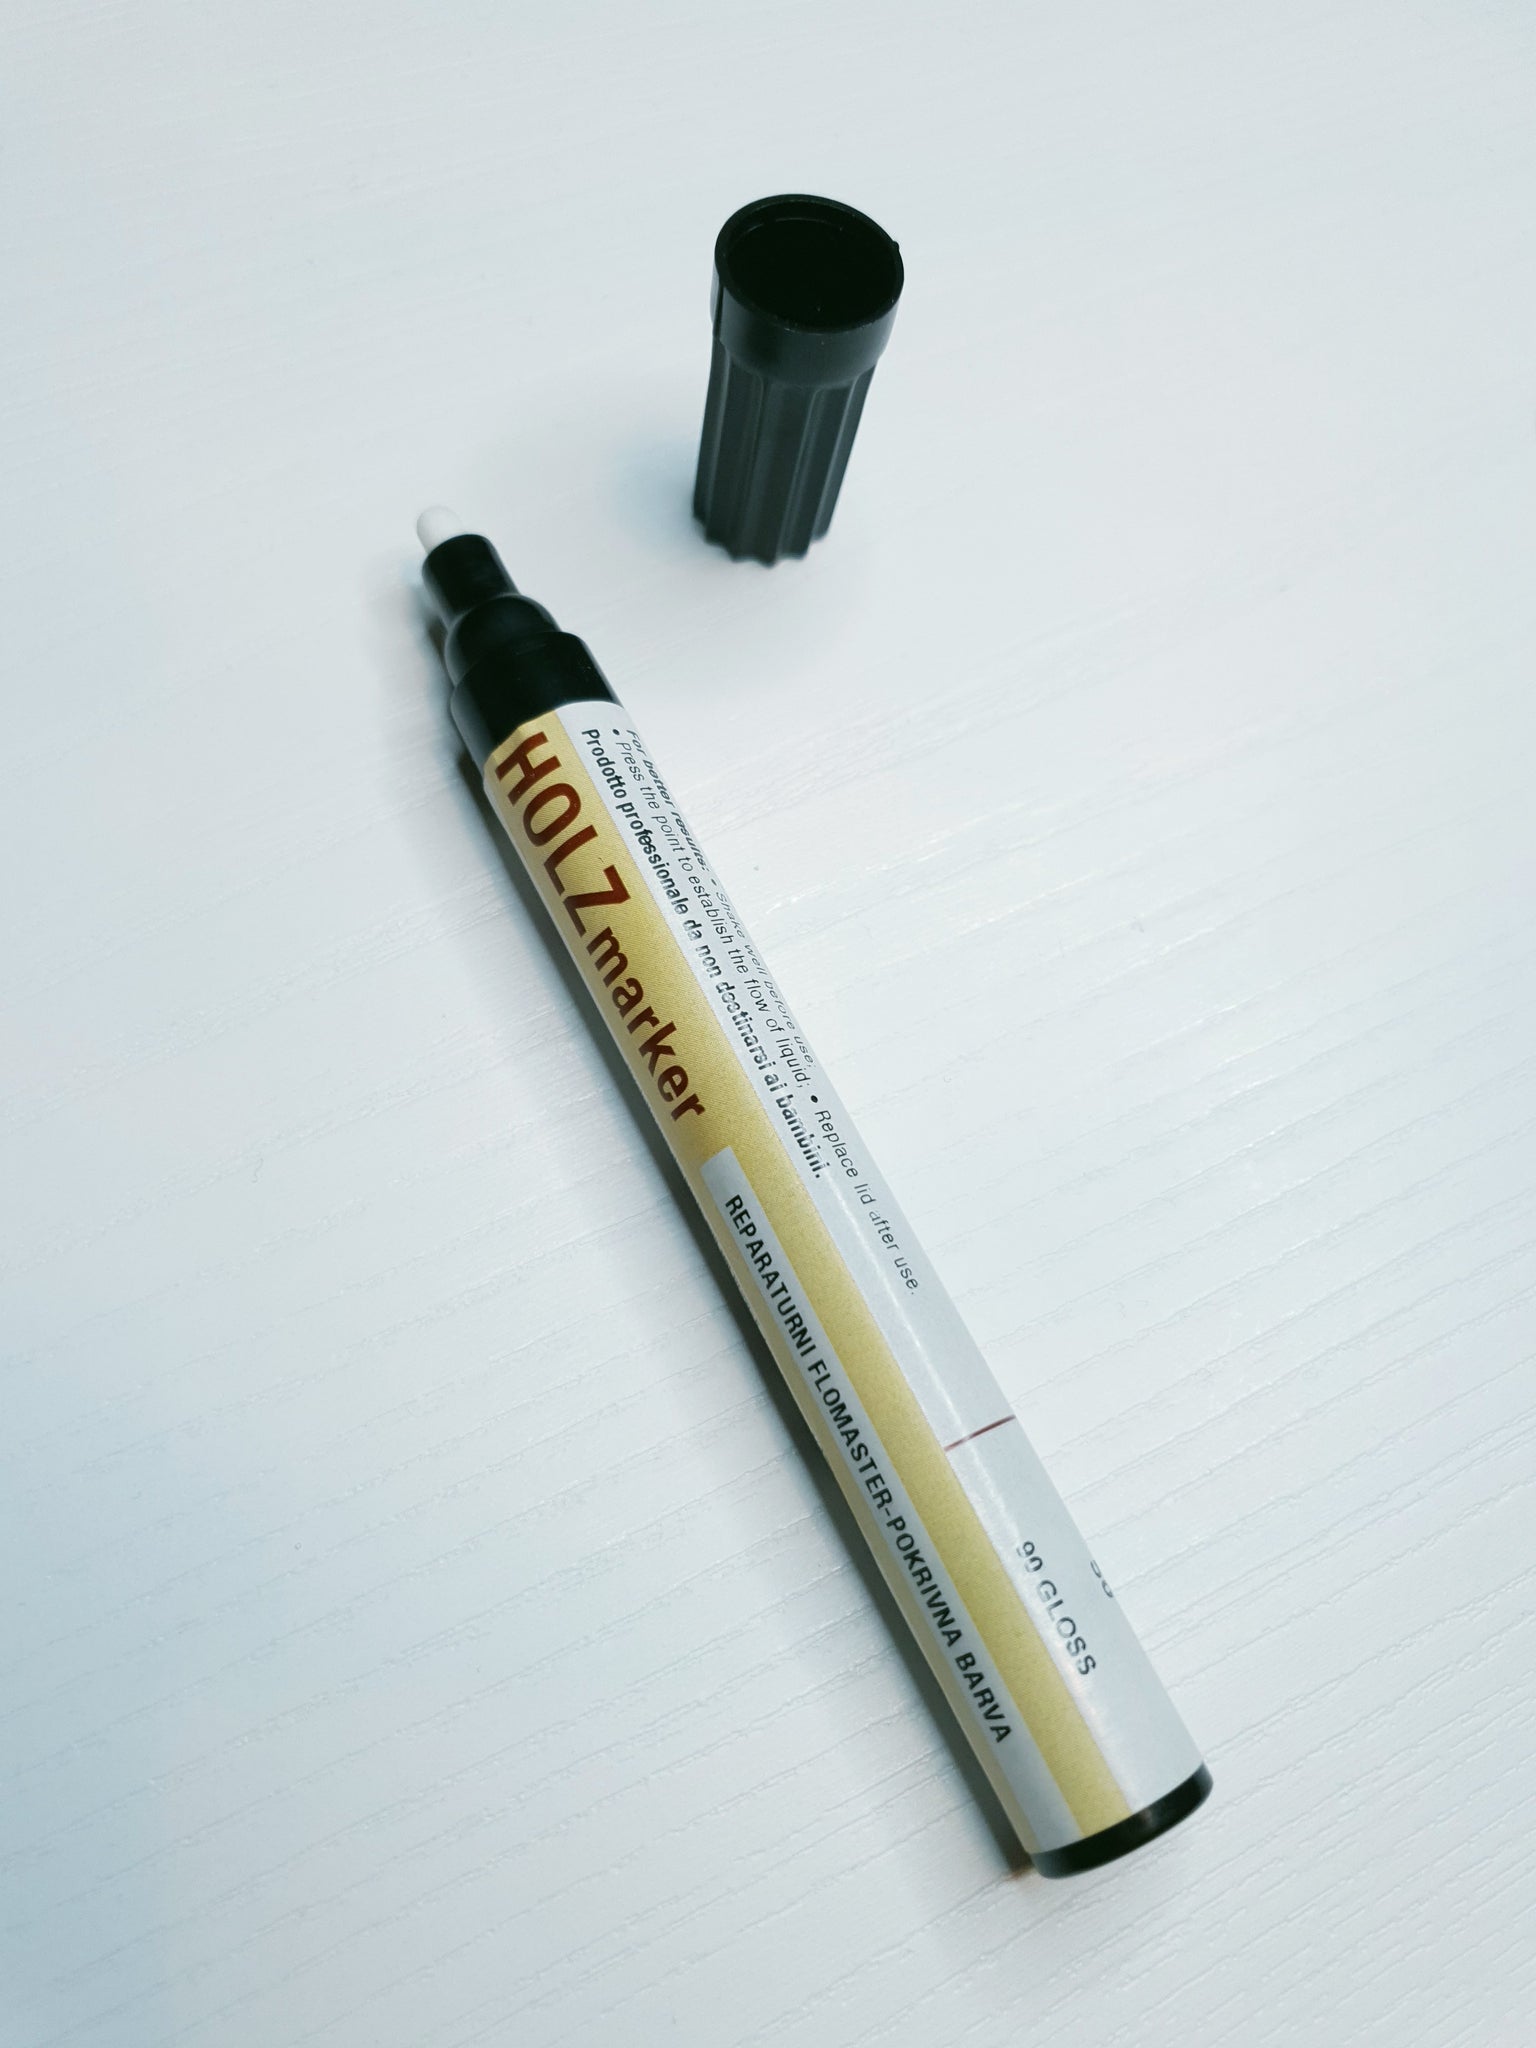 matte black marker pen